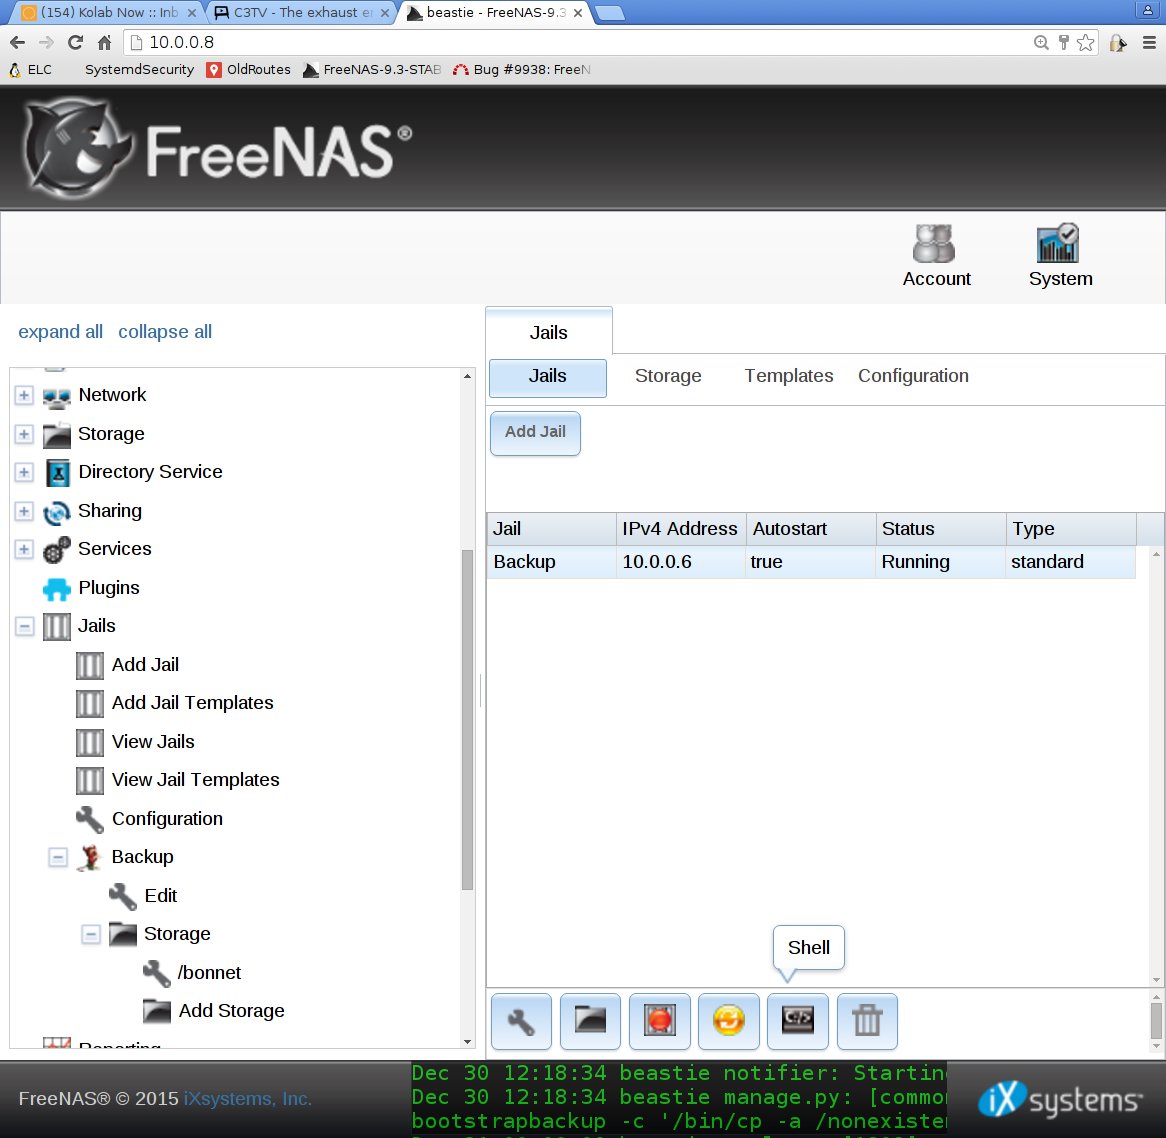 Detailed configuration of Backup
jail on FreeNAS